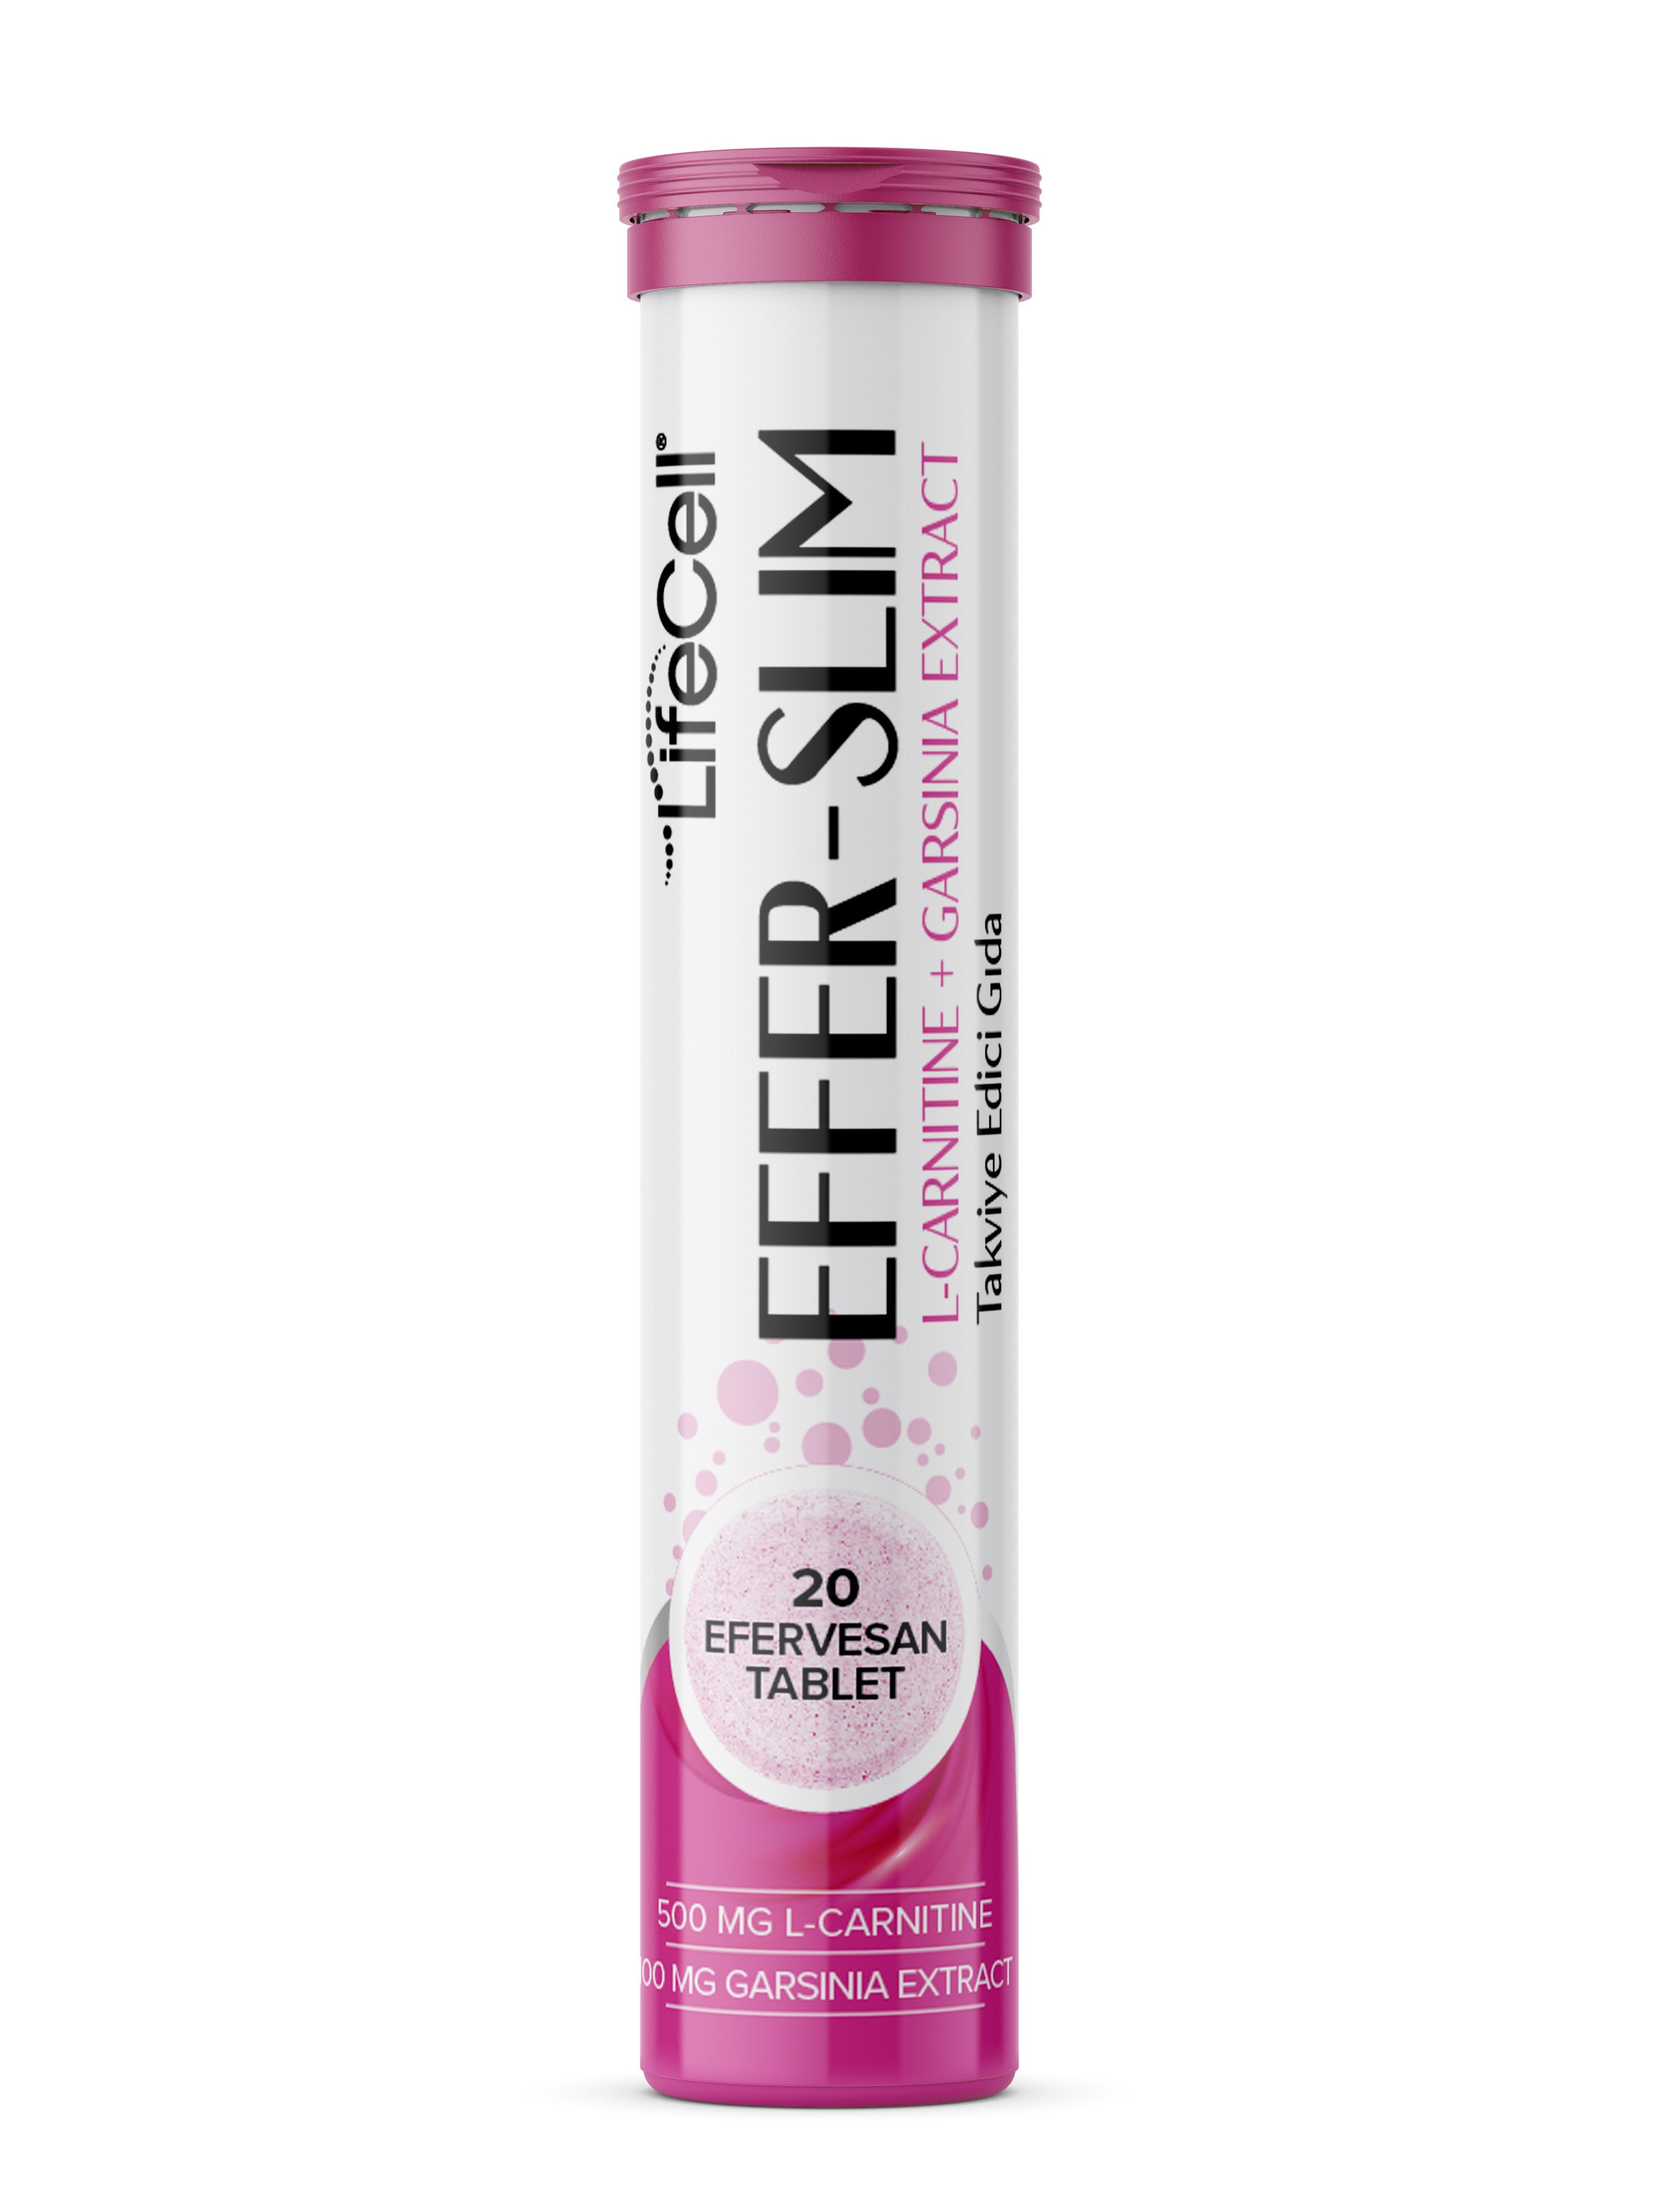 Efferslim ‐ L‐Carnitine Garsinia Extract